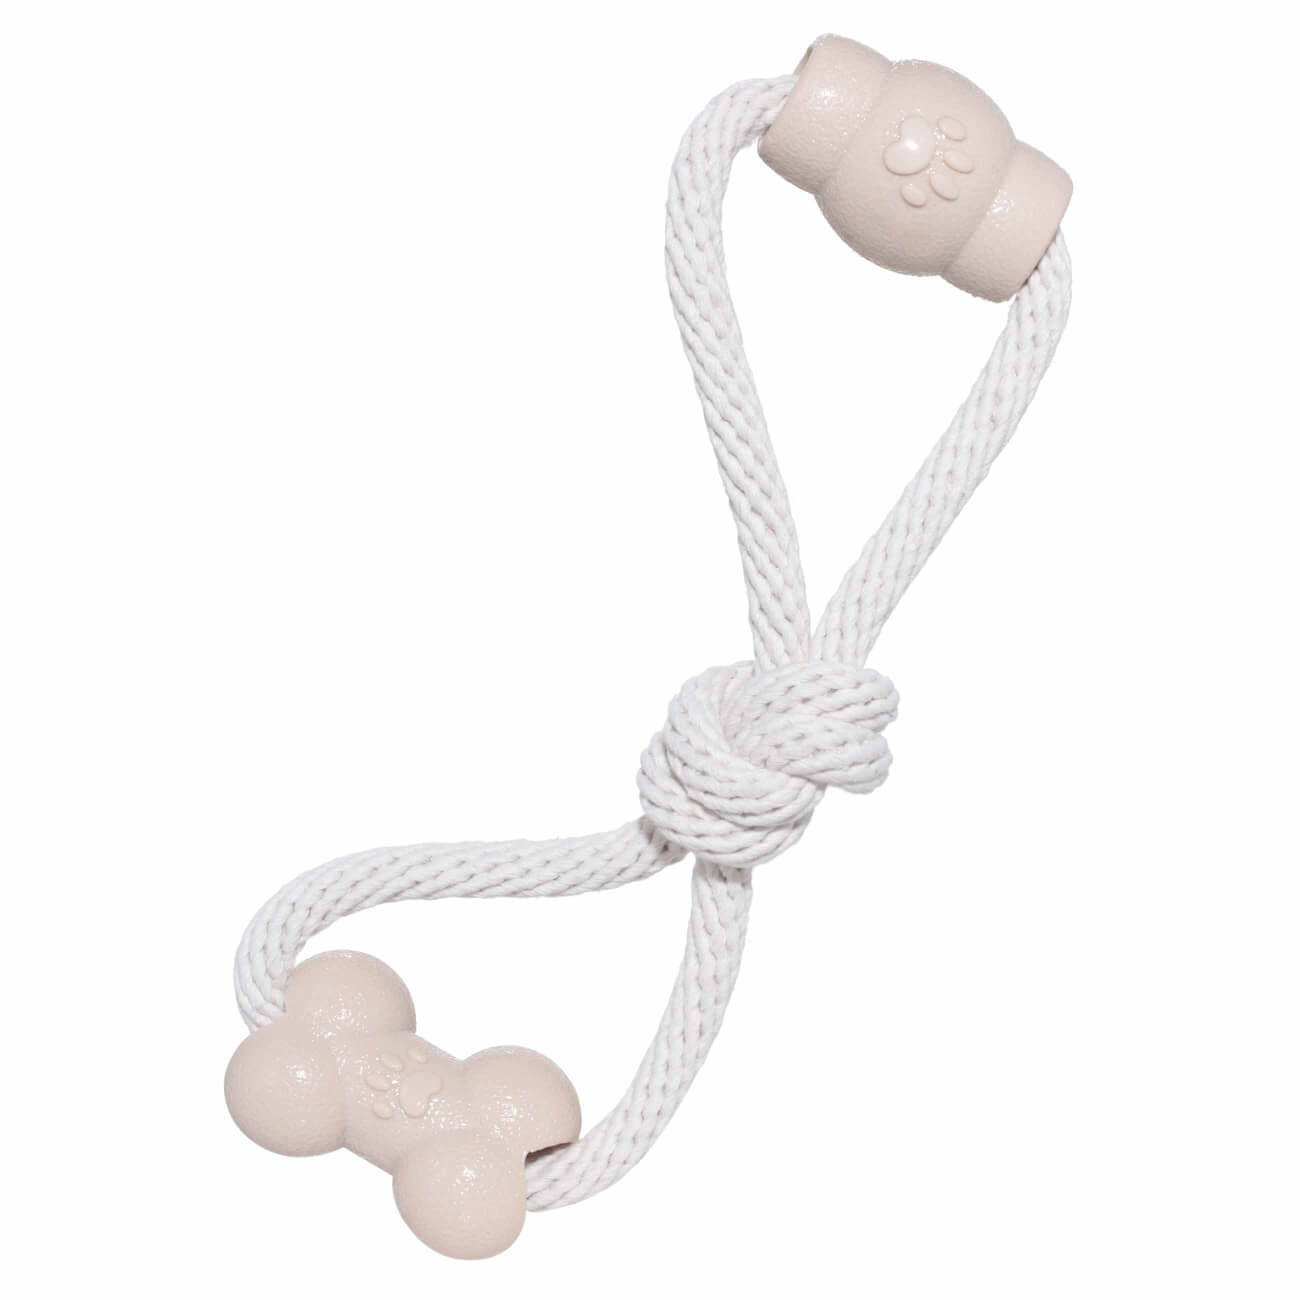 Dog toy, 28 cm, rubber / cotton, Beige, Bone and barrel on rope, Playful pet изображение № 1